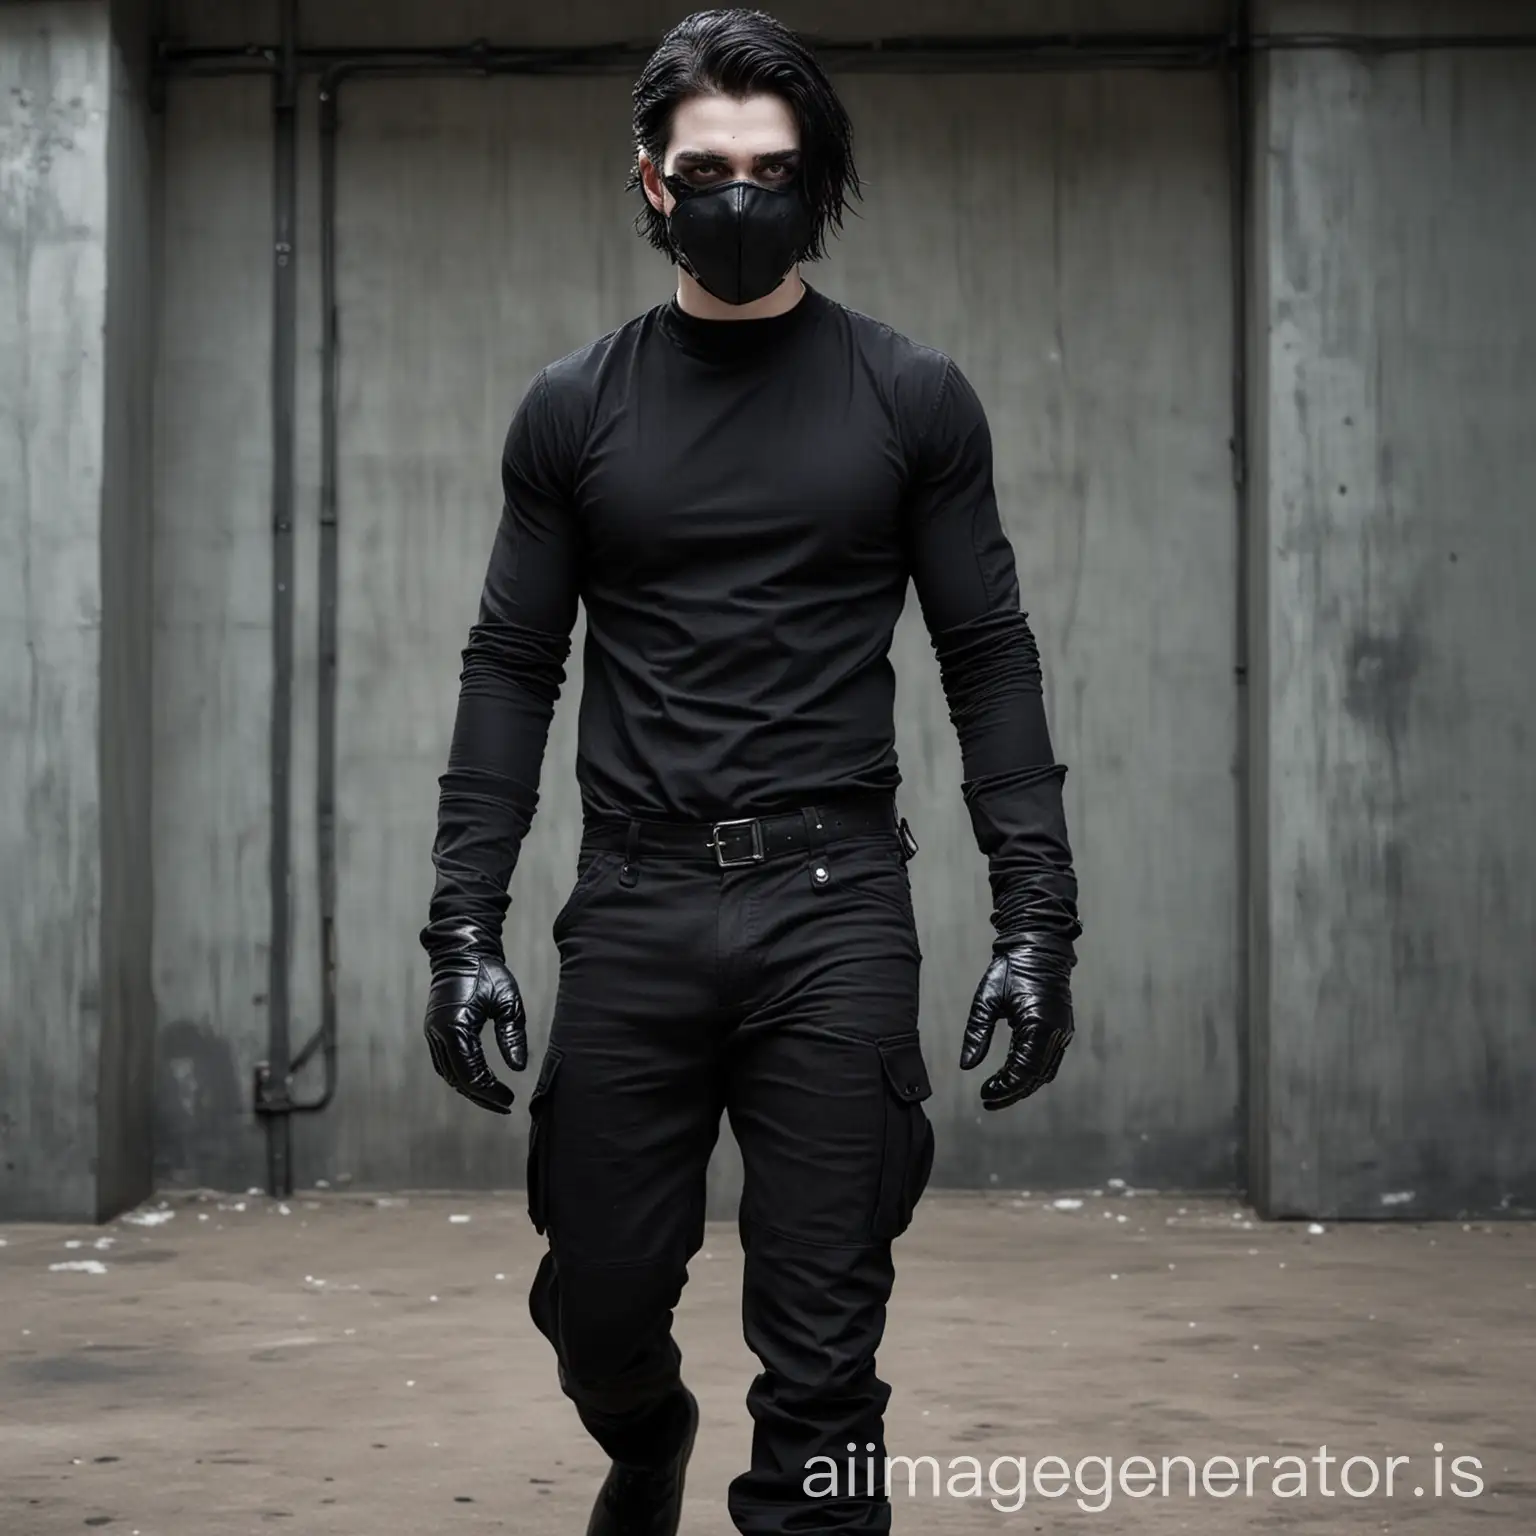 Man-in-Black-Cargo-Pants-and-Metallic-Mask